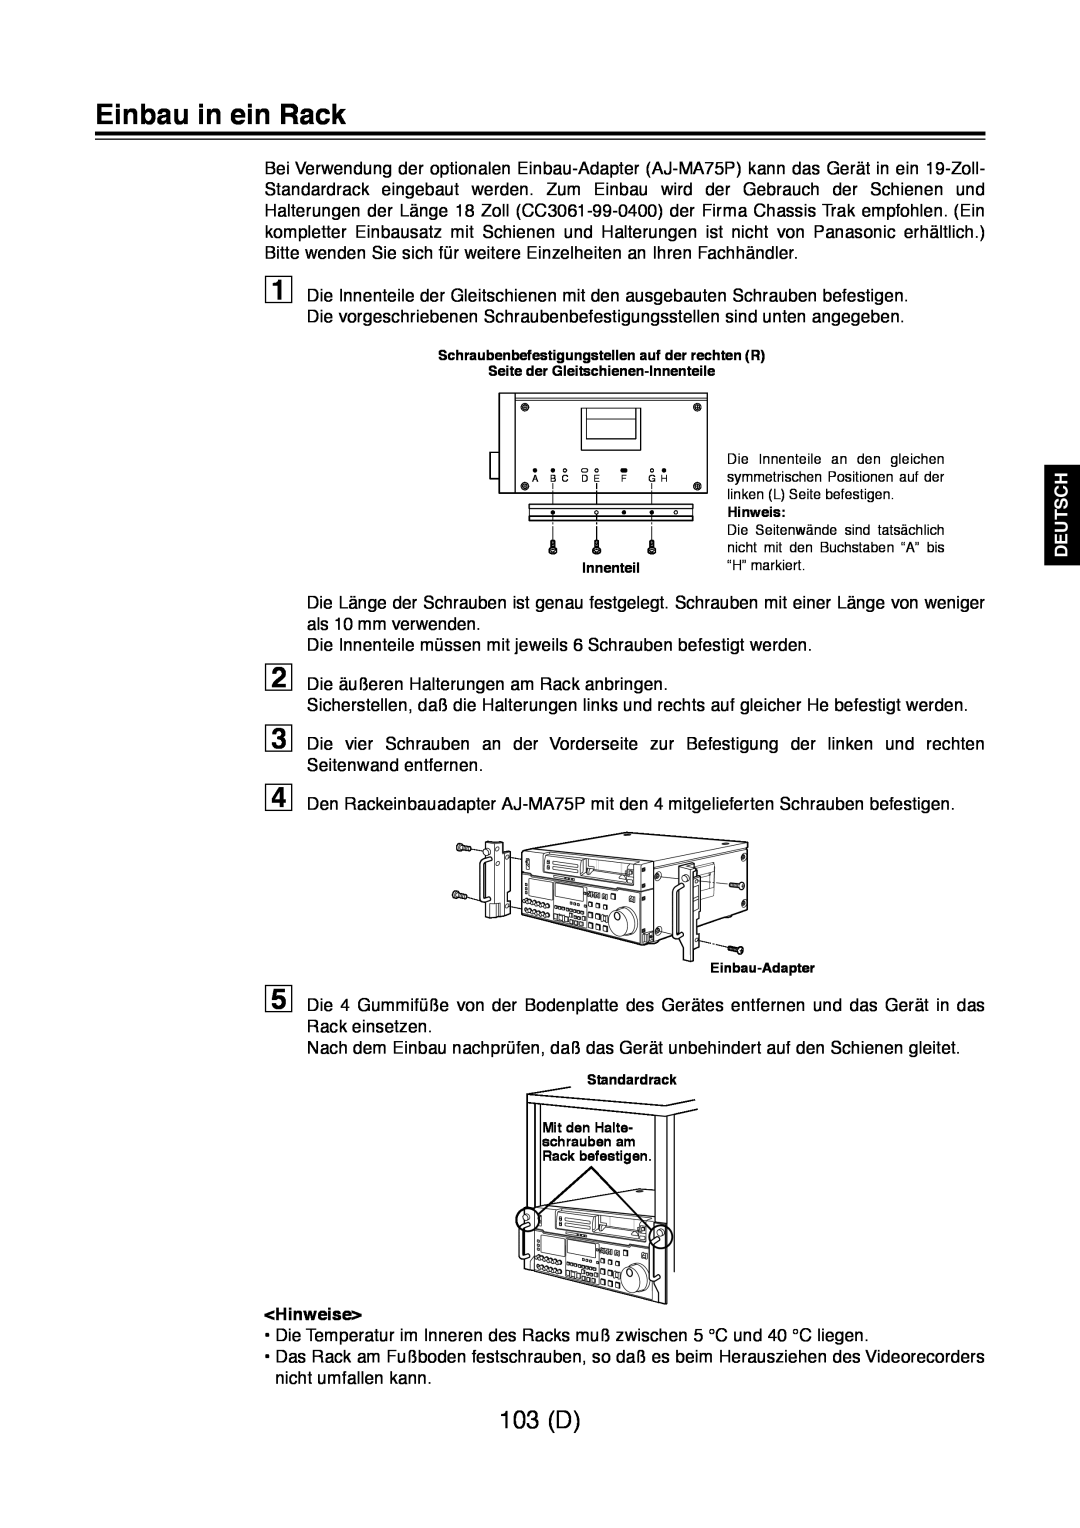 Panasonic AJ-D960 operating instructions Einbau in ein Rack, 103 D, Deutsch, Hinweise 